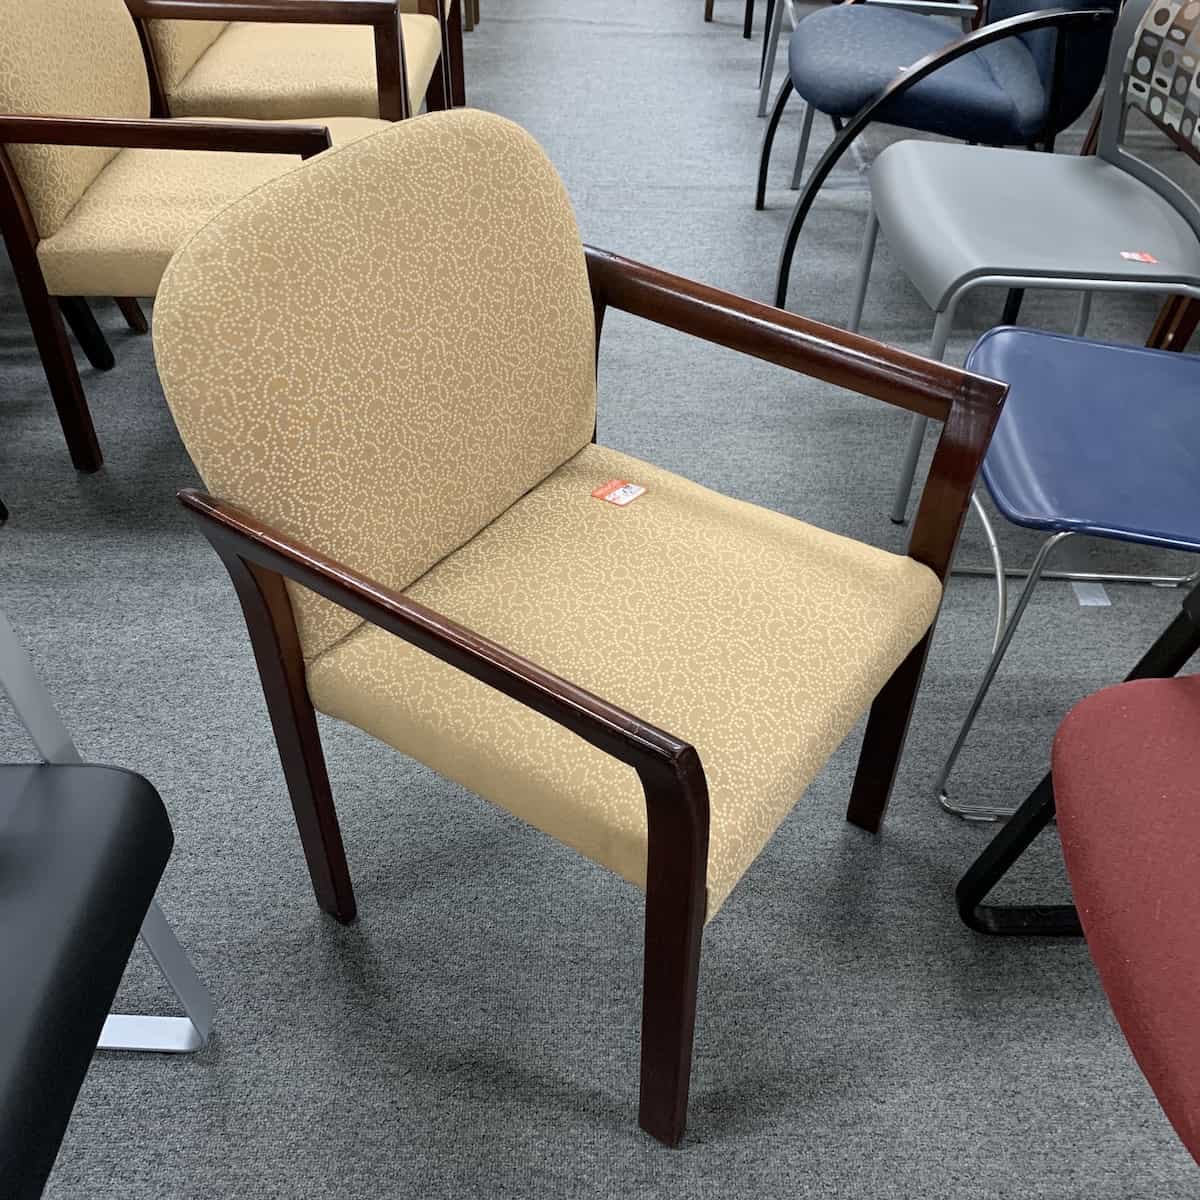 mahogany-tan-guest-chair-front